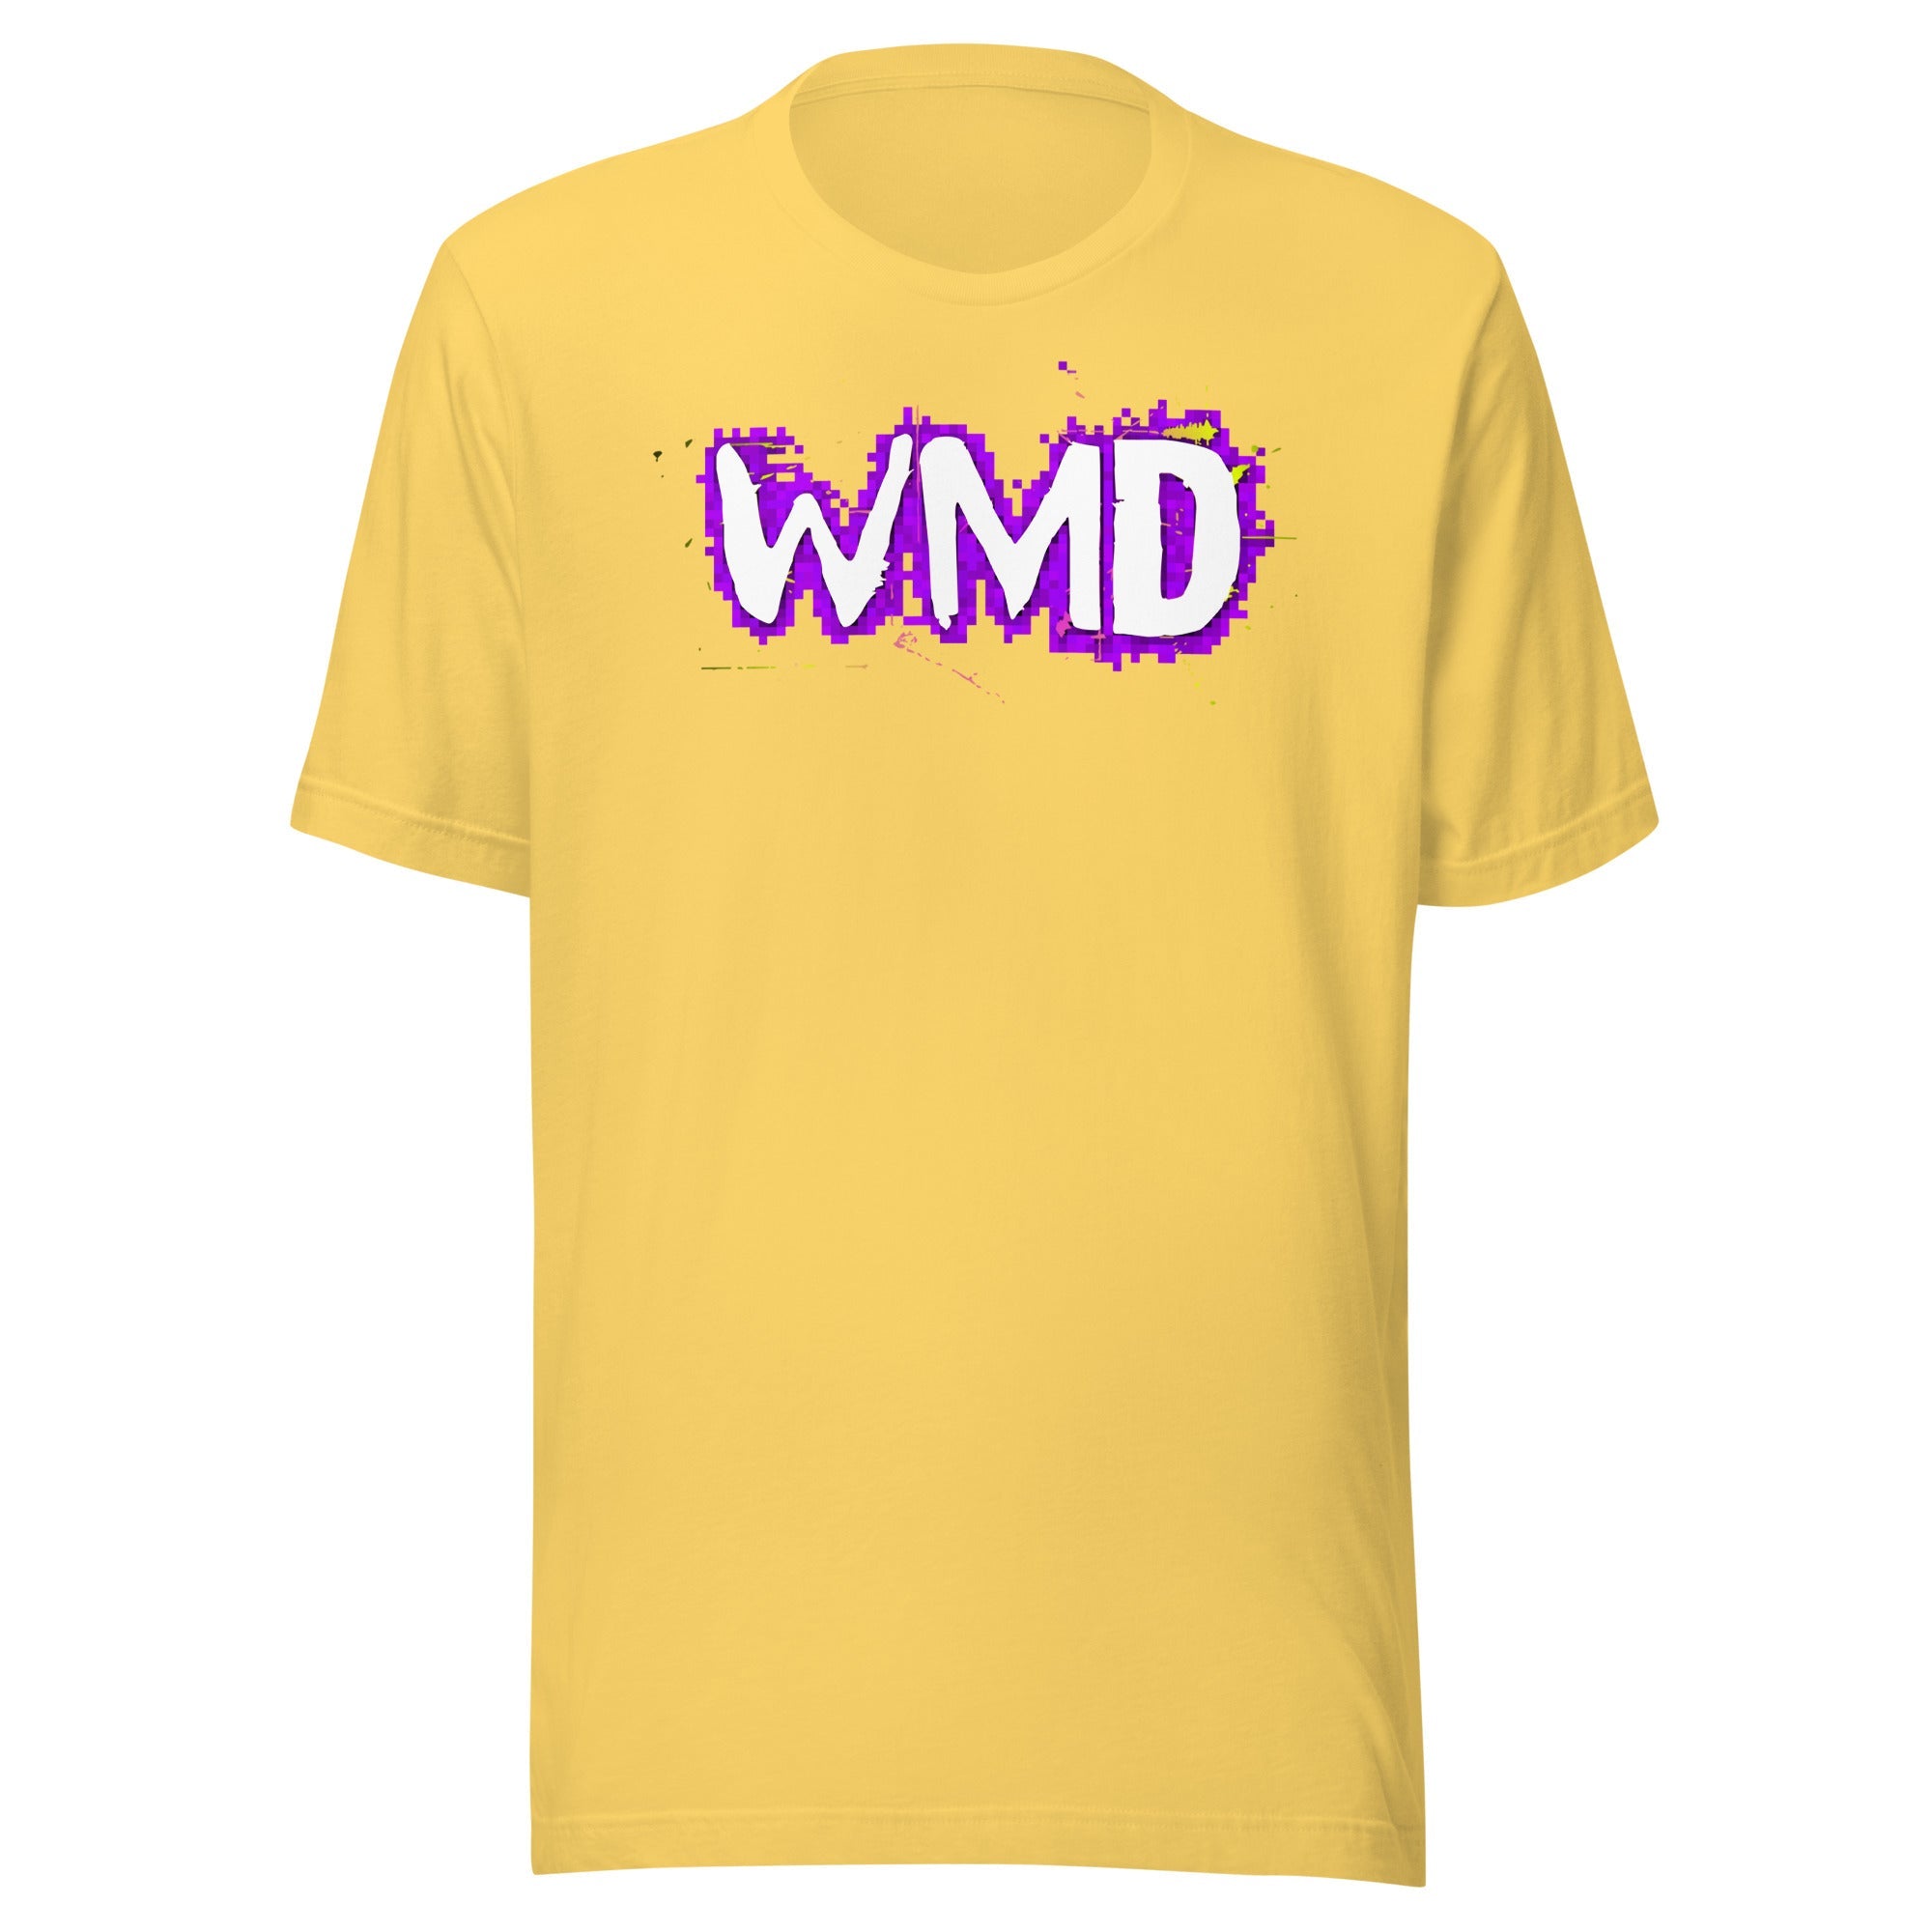 WMD - T Shirt - Old School WMD Logo T Shirt - WMD - Aqua - logo - T-shirt -